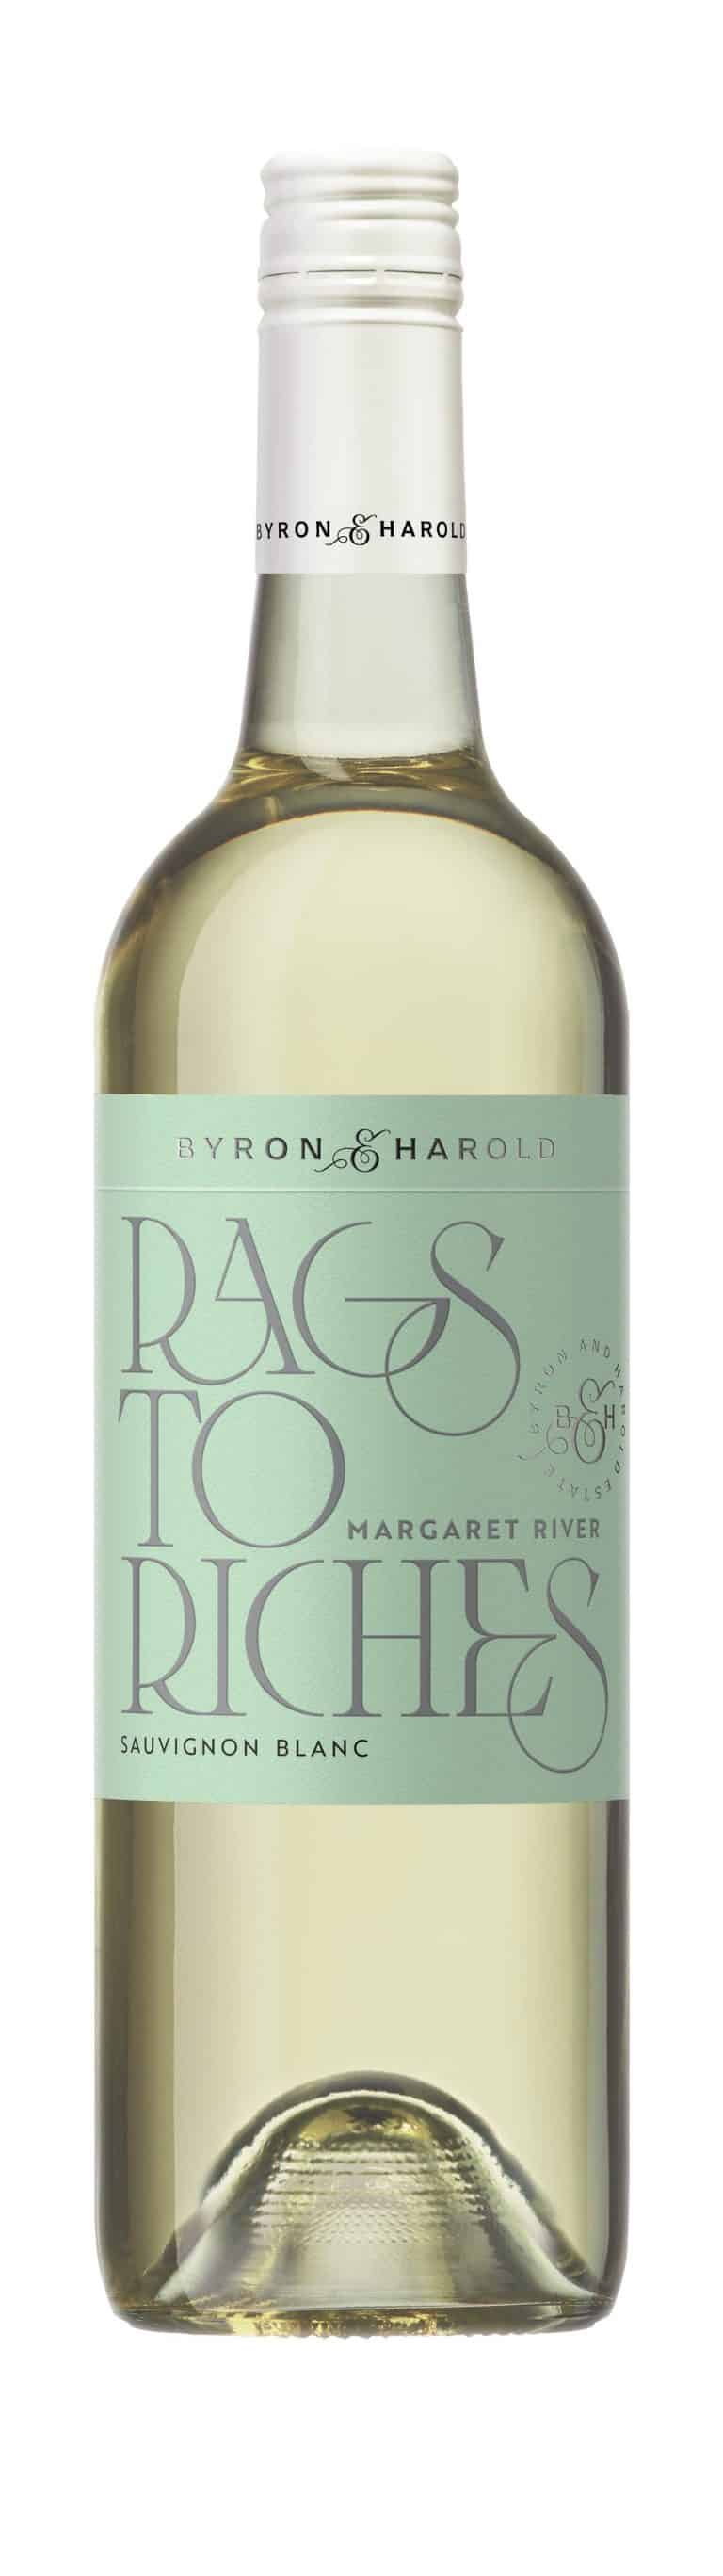 Byron & Harold Rags to Riches Sauv Blanc